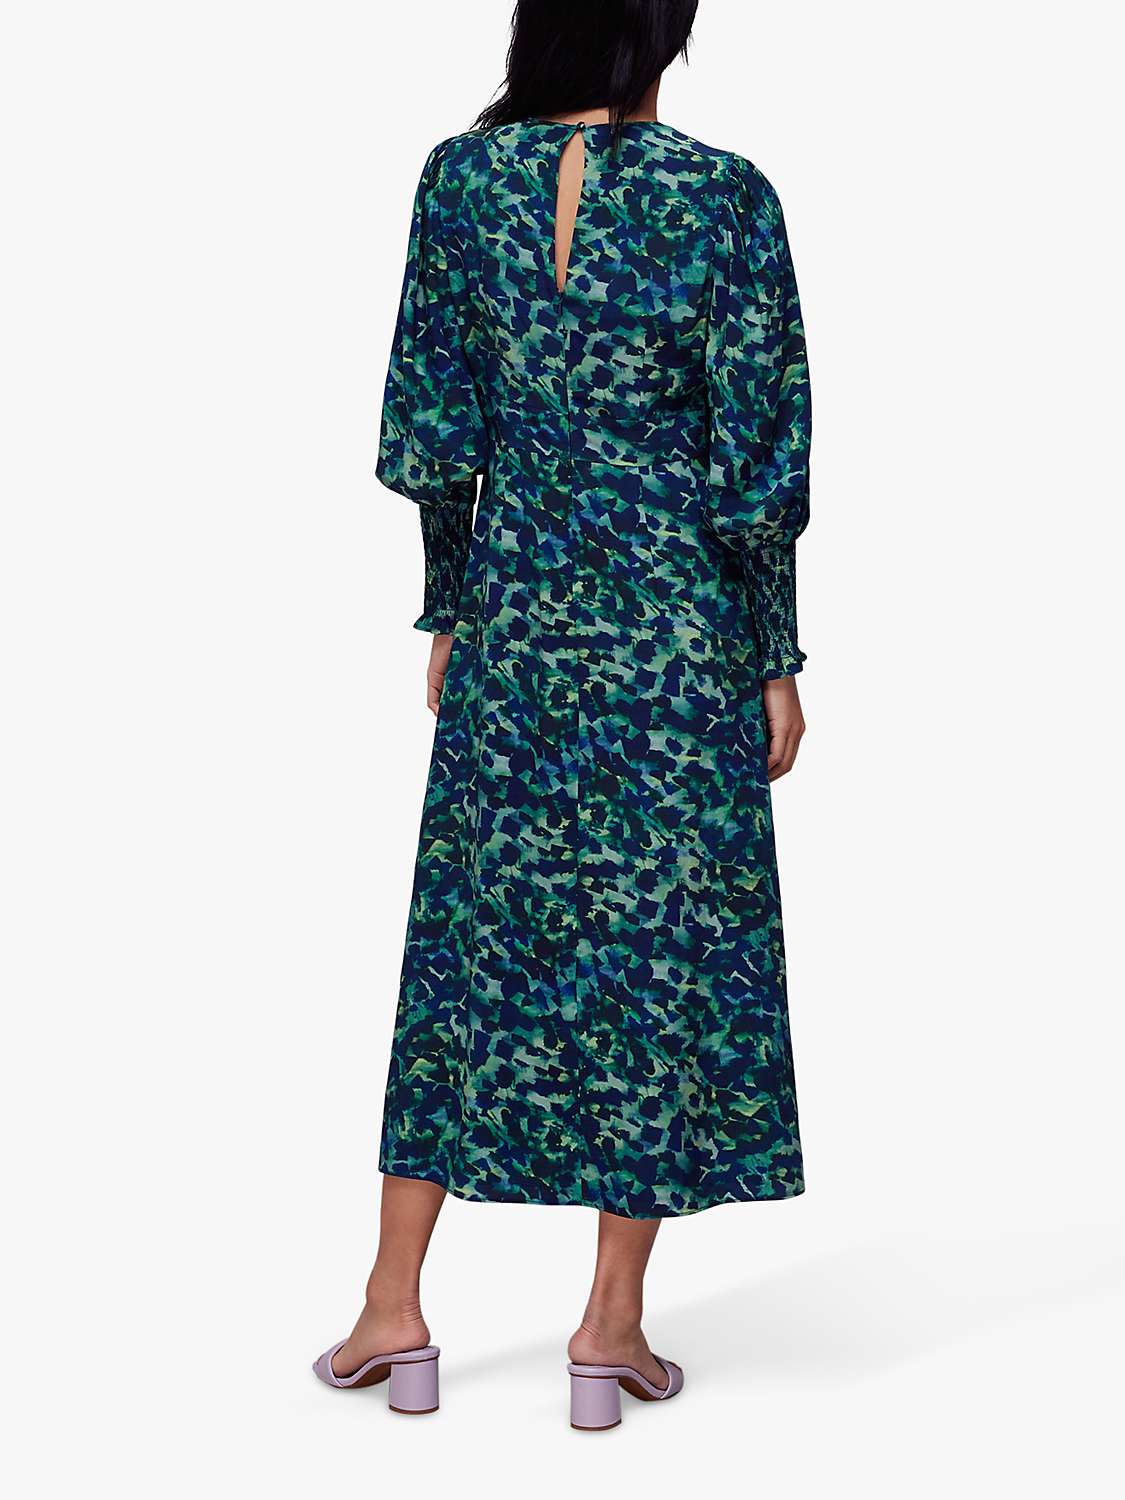 Whistles Cheetah Print Midi Dress, Green/Multi at John Lewis & Partners